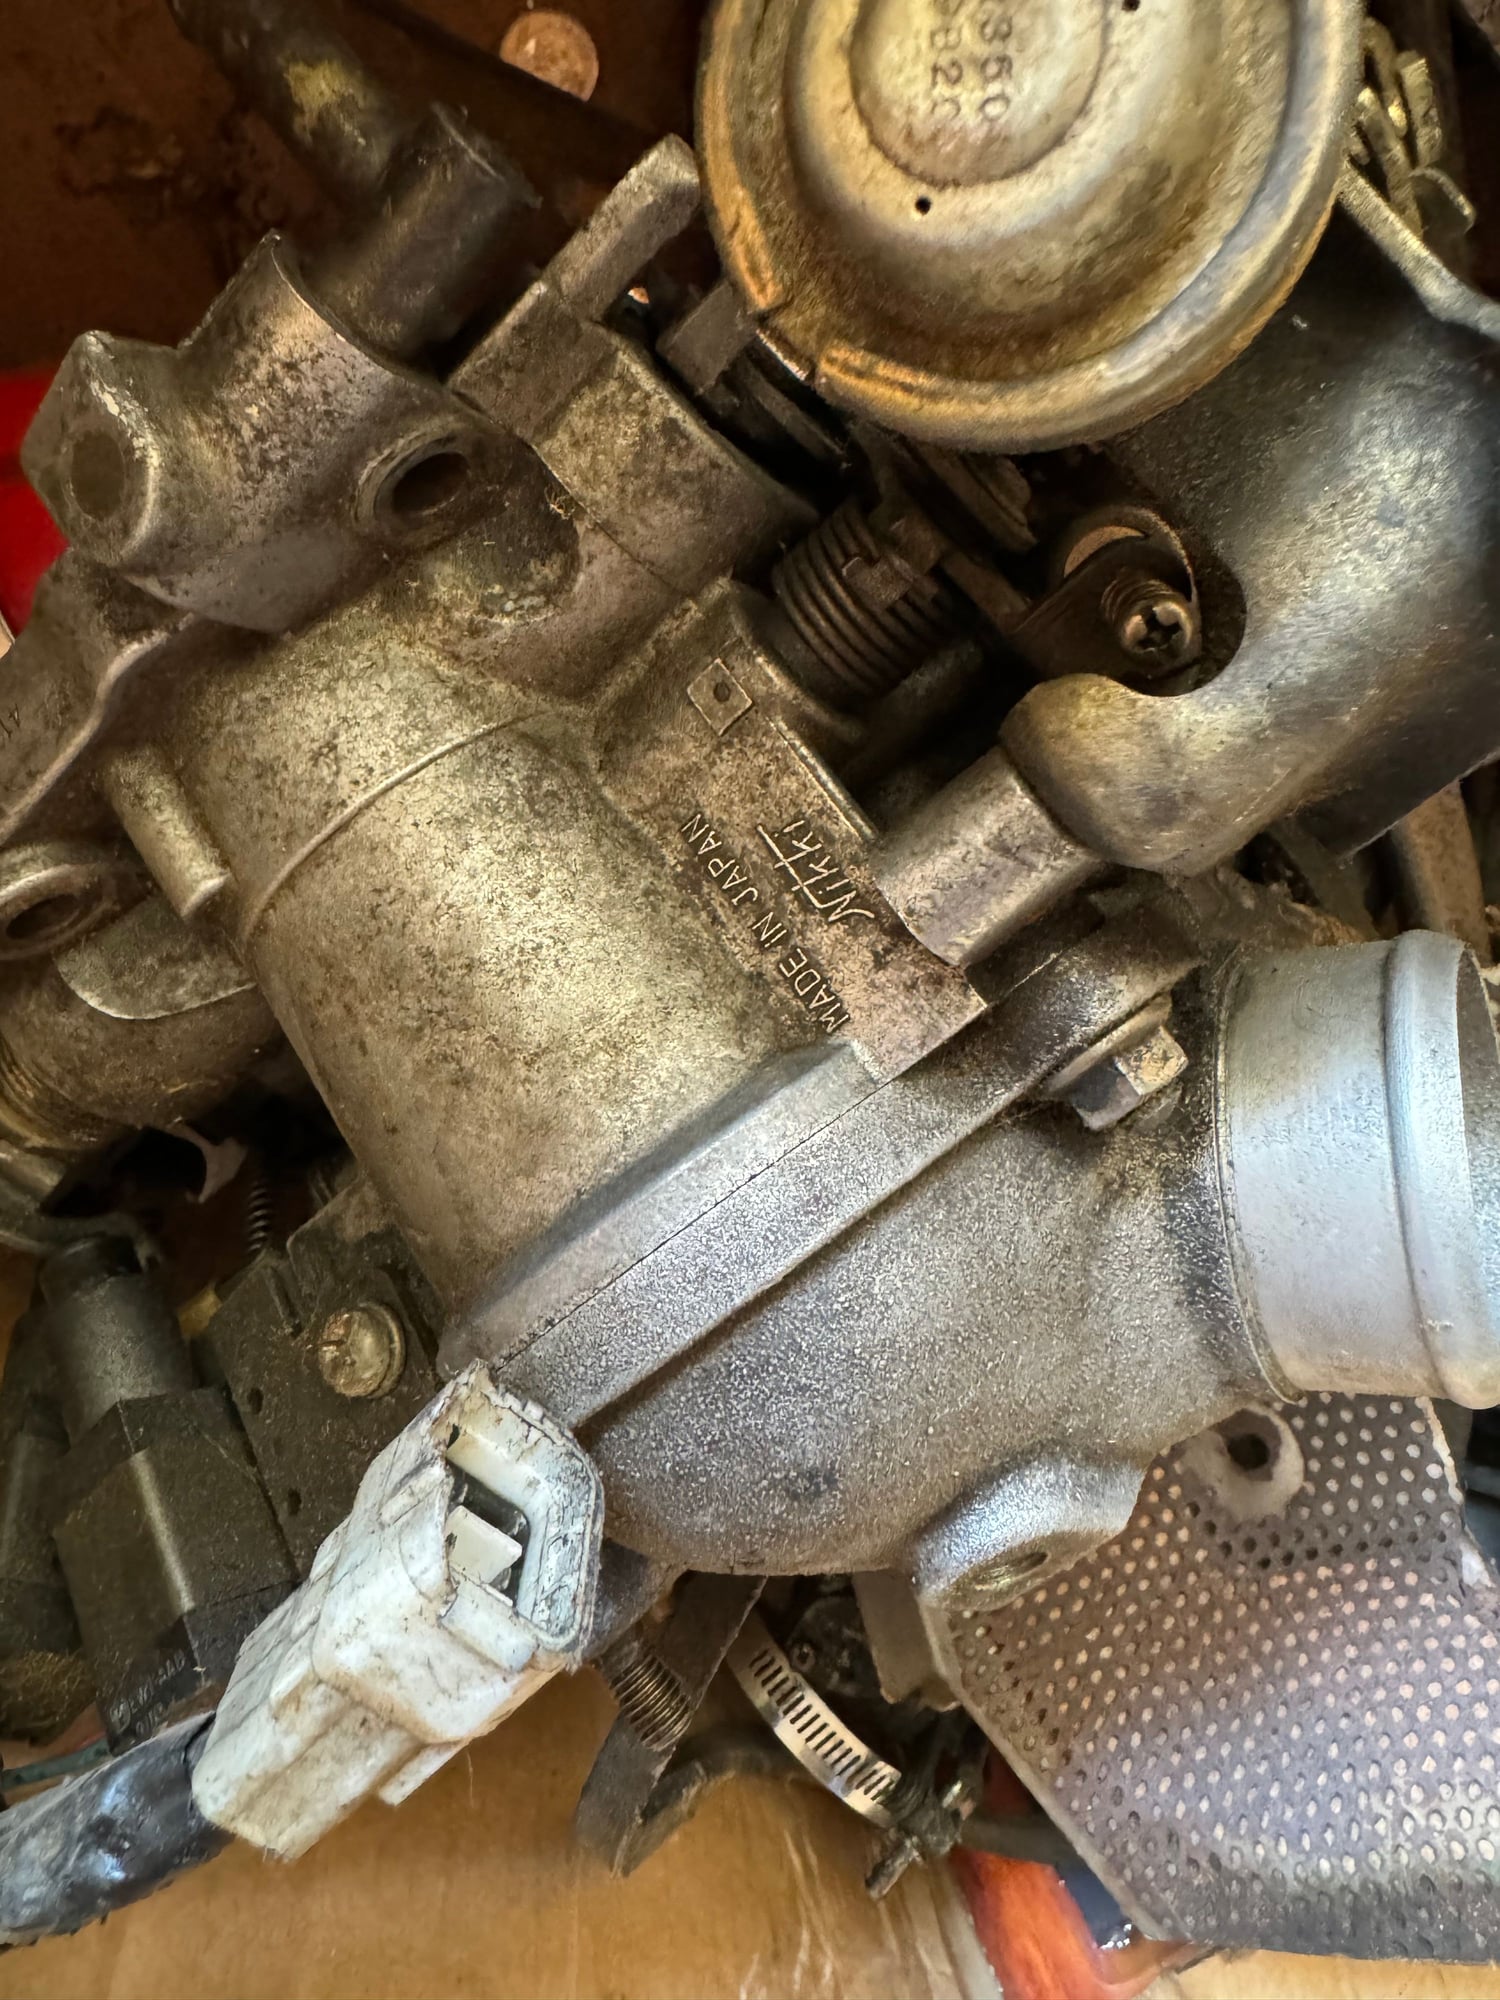 Engine - Intake/Fuel - S4 turbo parts - Used - Saint Louis, MO 63034, United States